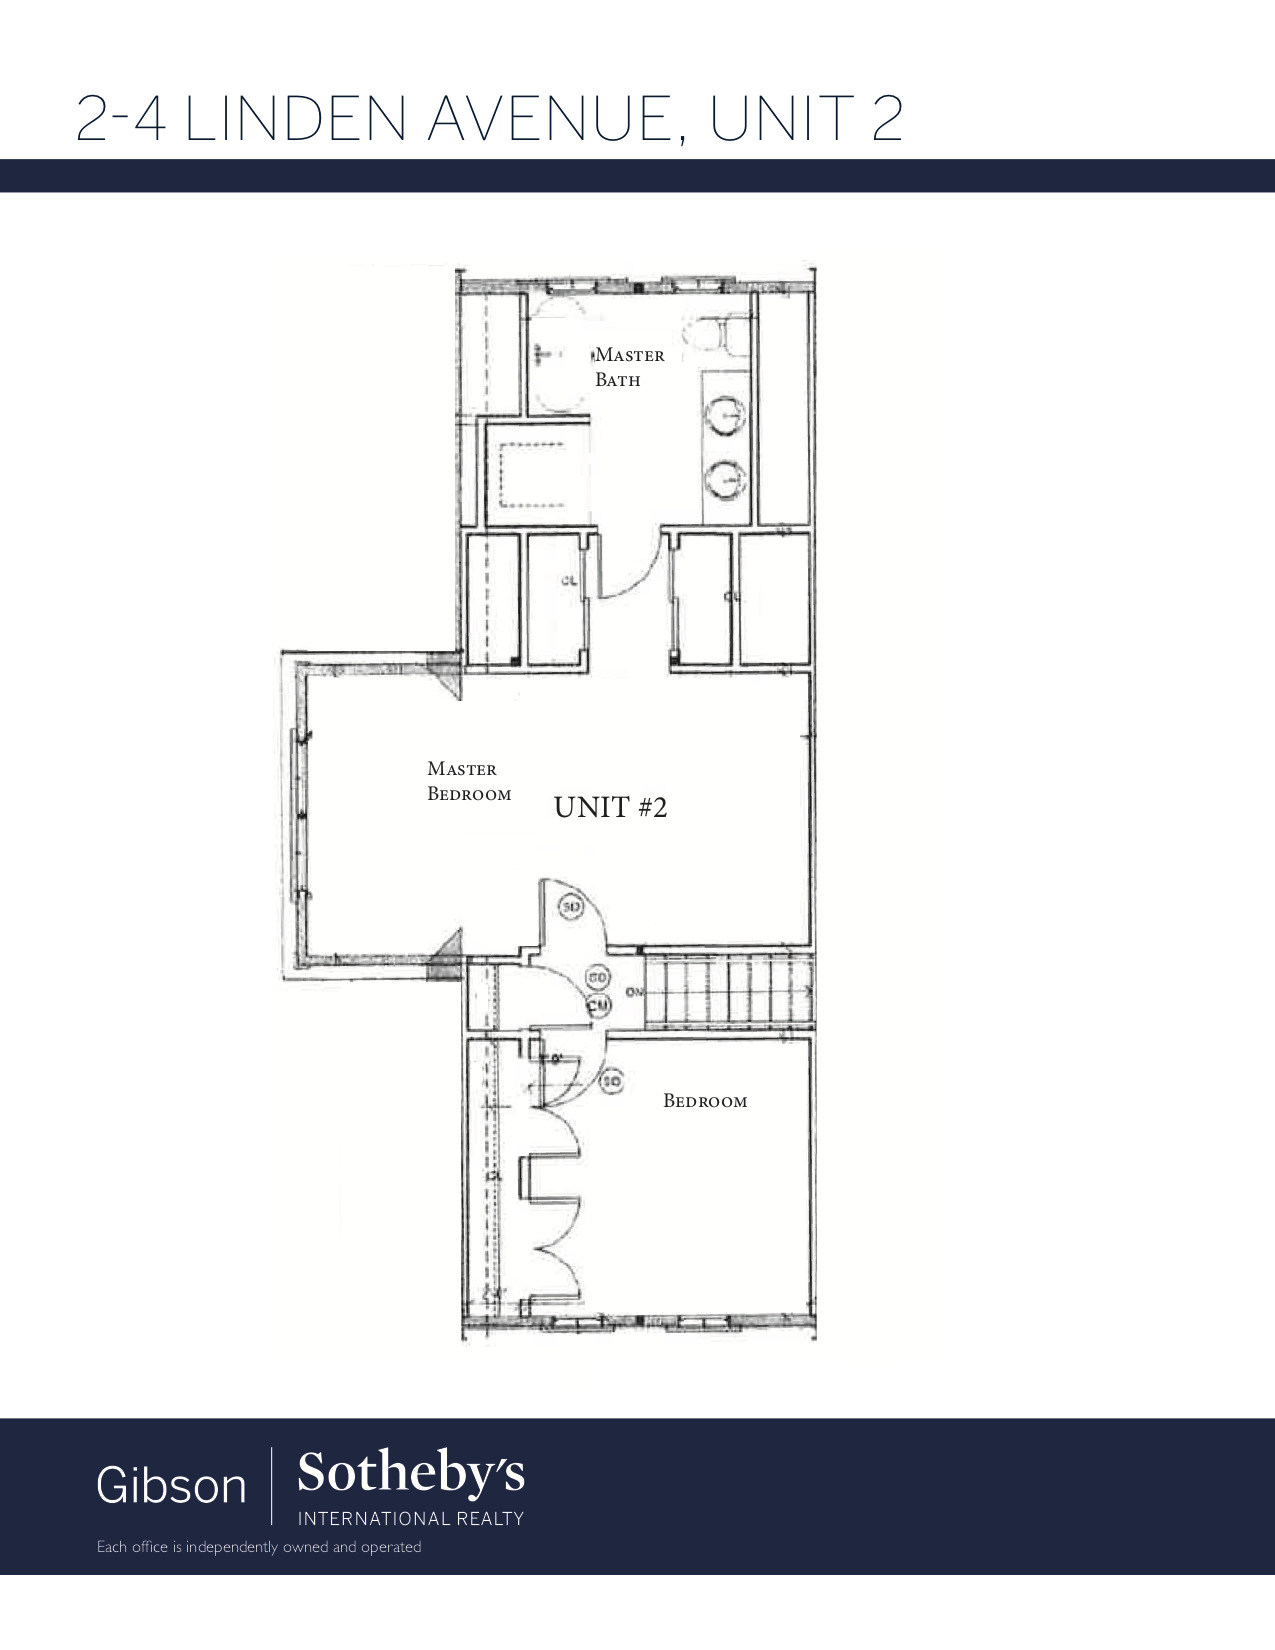 2-4 Linden Ave, Unit 2 2nd floor plan